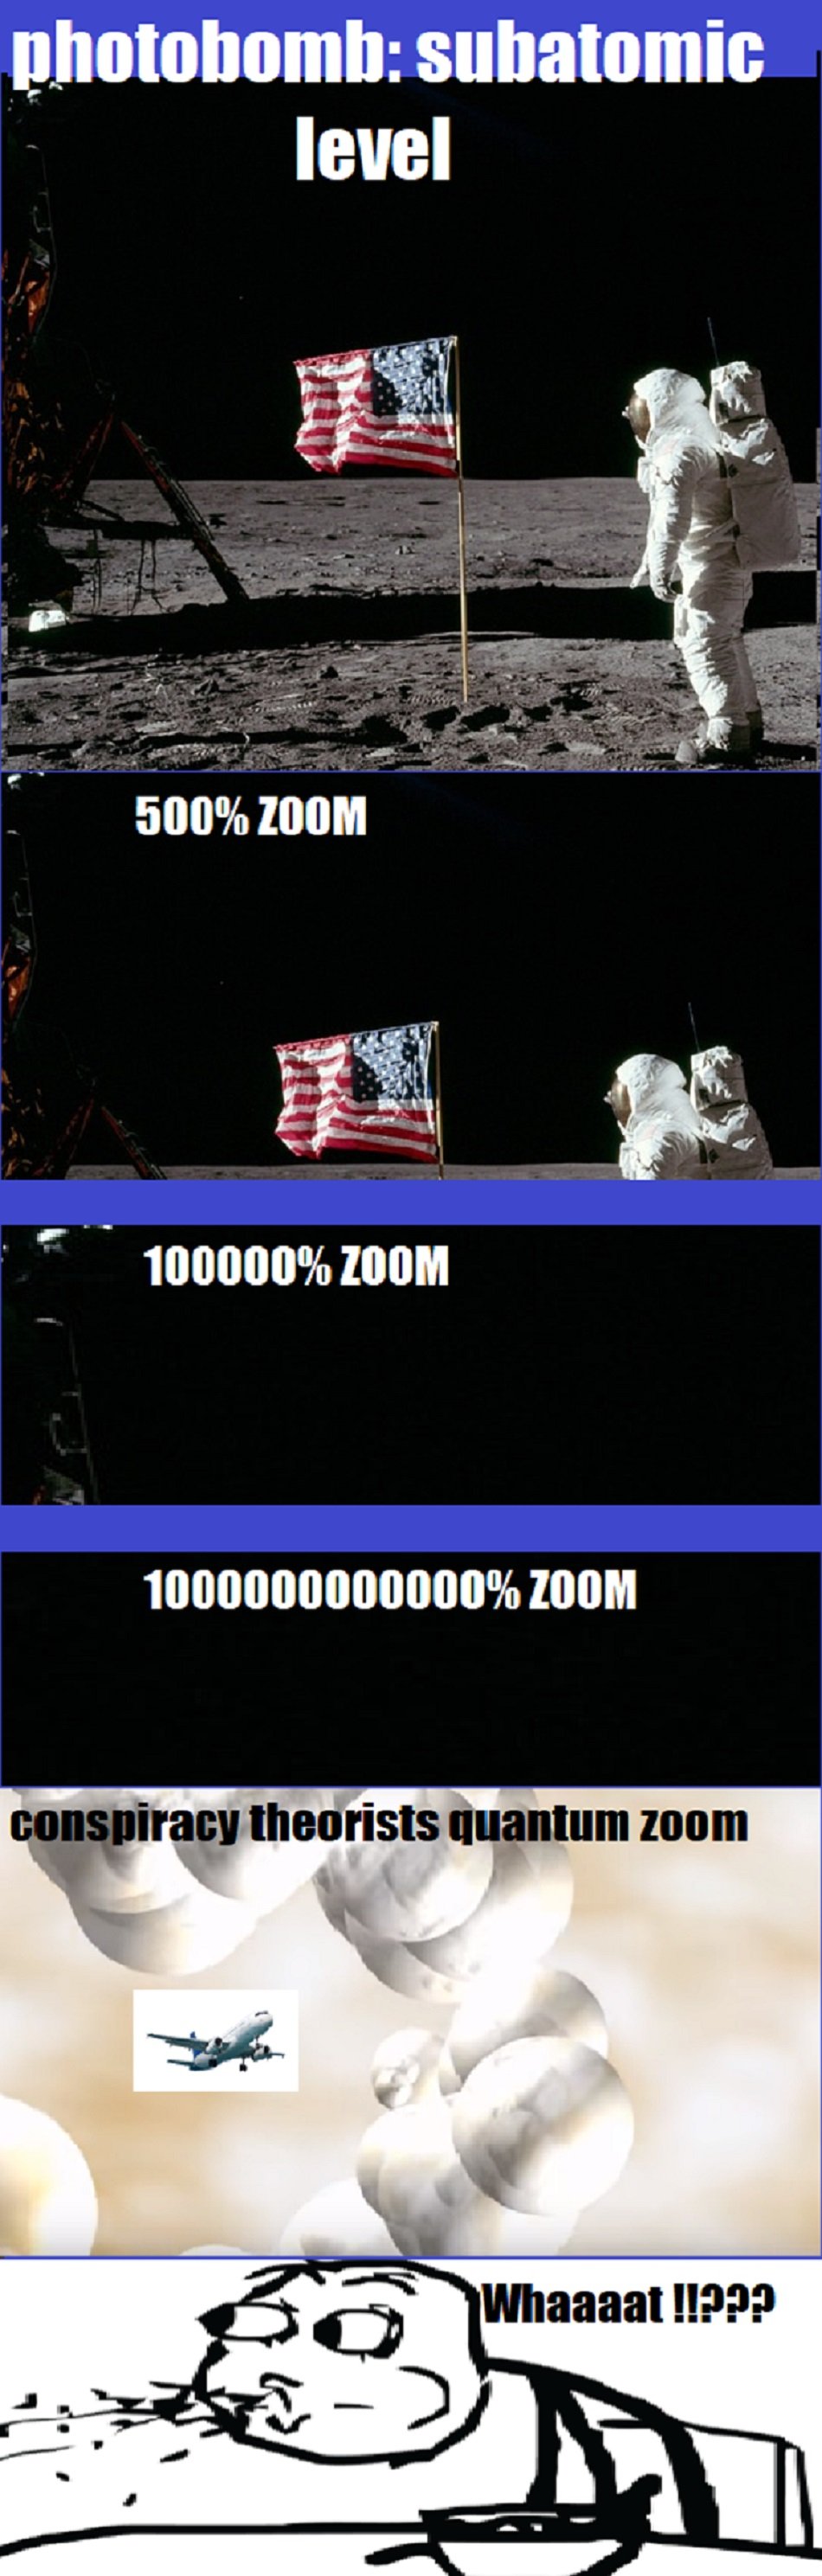 moon-landing-62879_960_720 - Copy (2).jpg